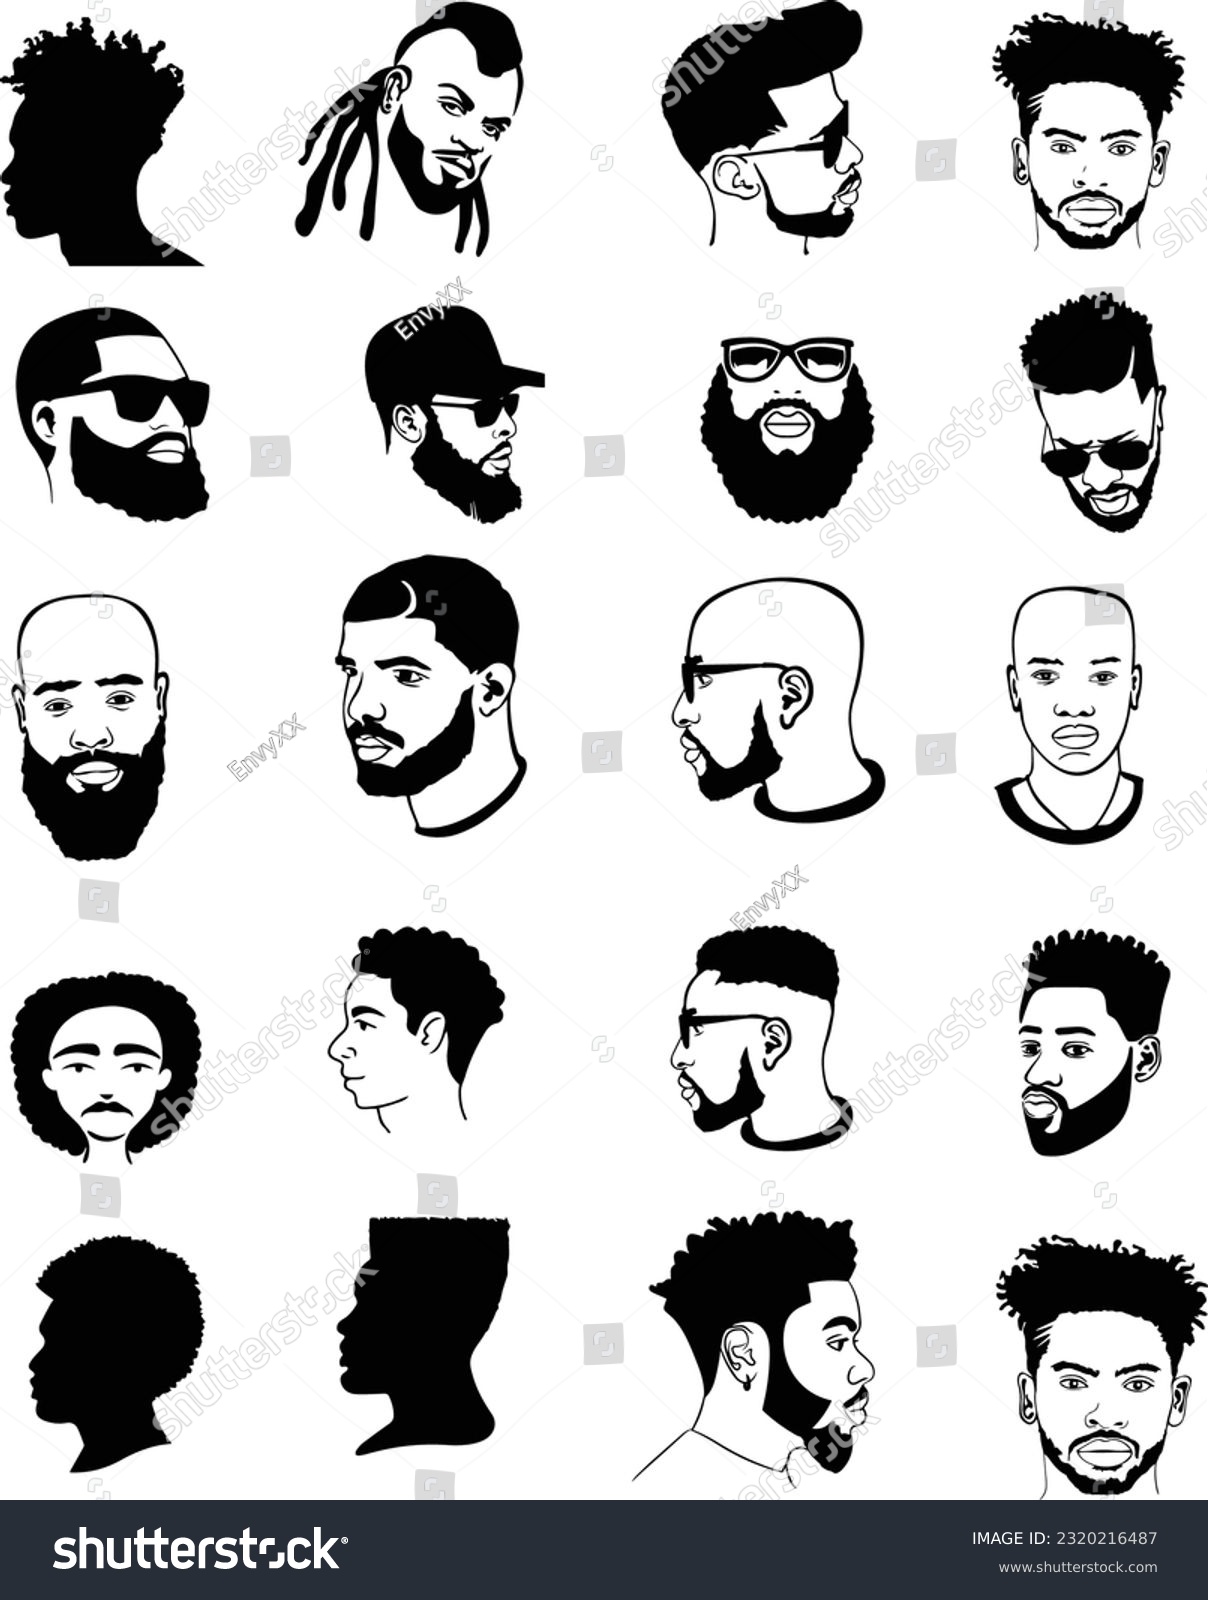 SVG of African Men Vector, Afro Men, Black Man Vector, African American Black African American afro male face, curls hair style Black men Silhouettes  svg